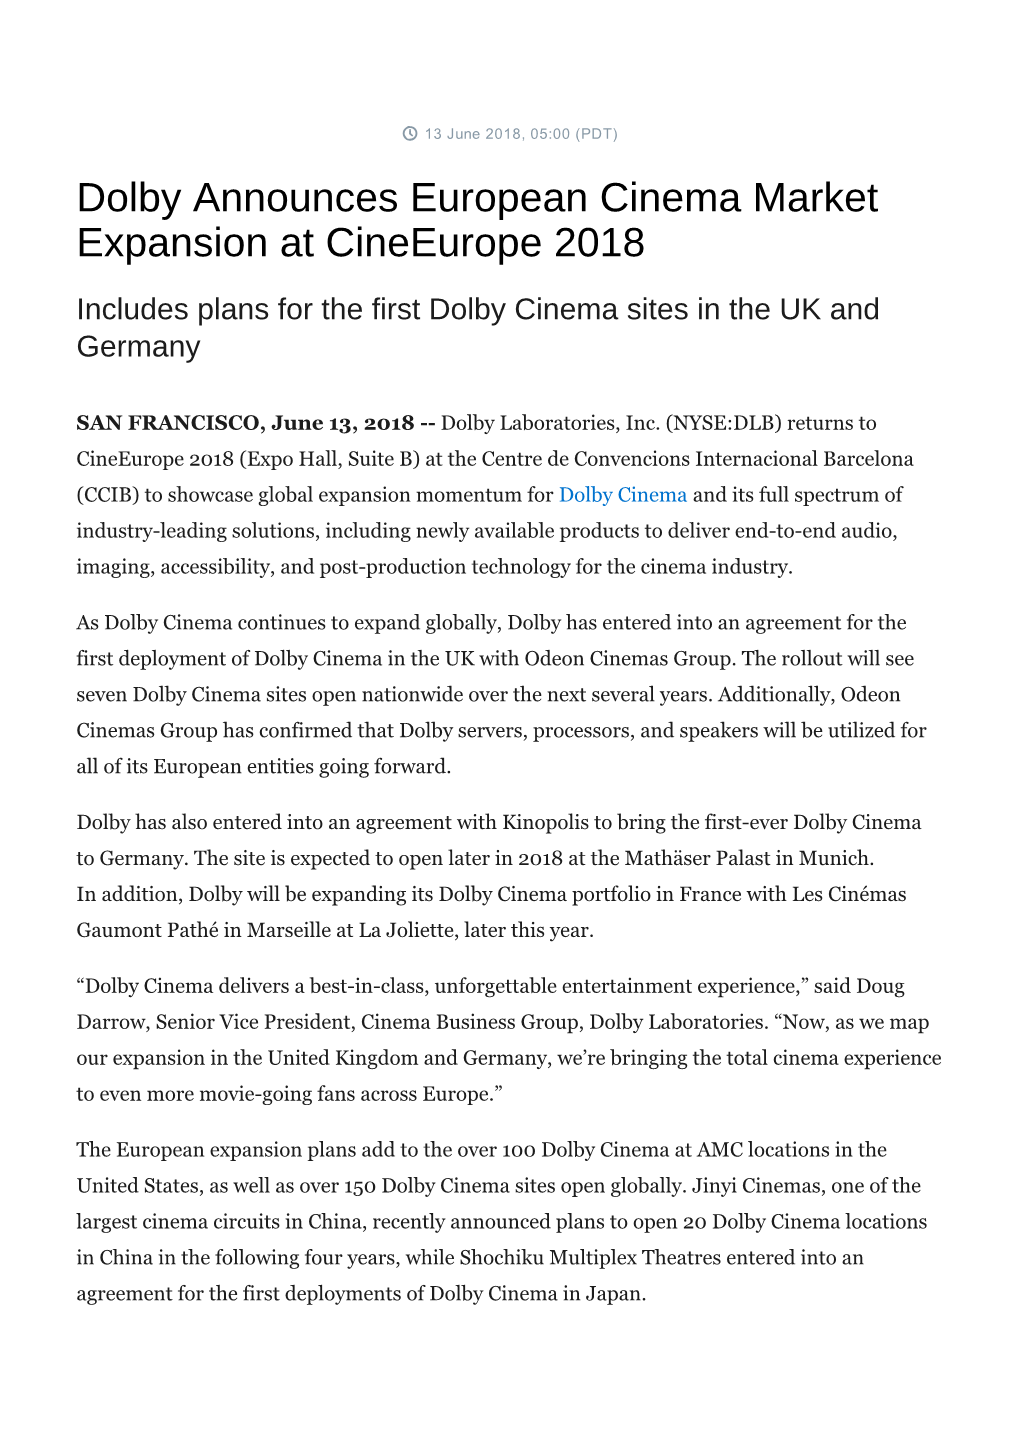 Dolby Announces European Cinema Market Expansion at Cineeurope 2018